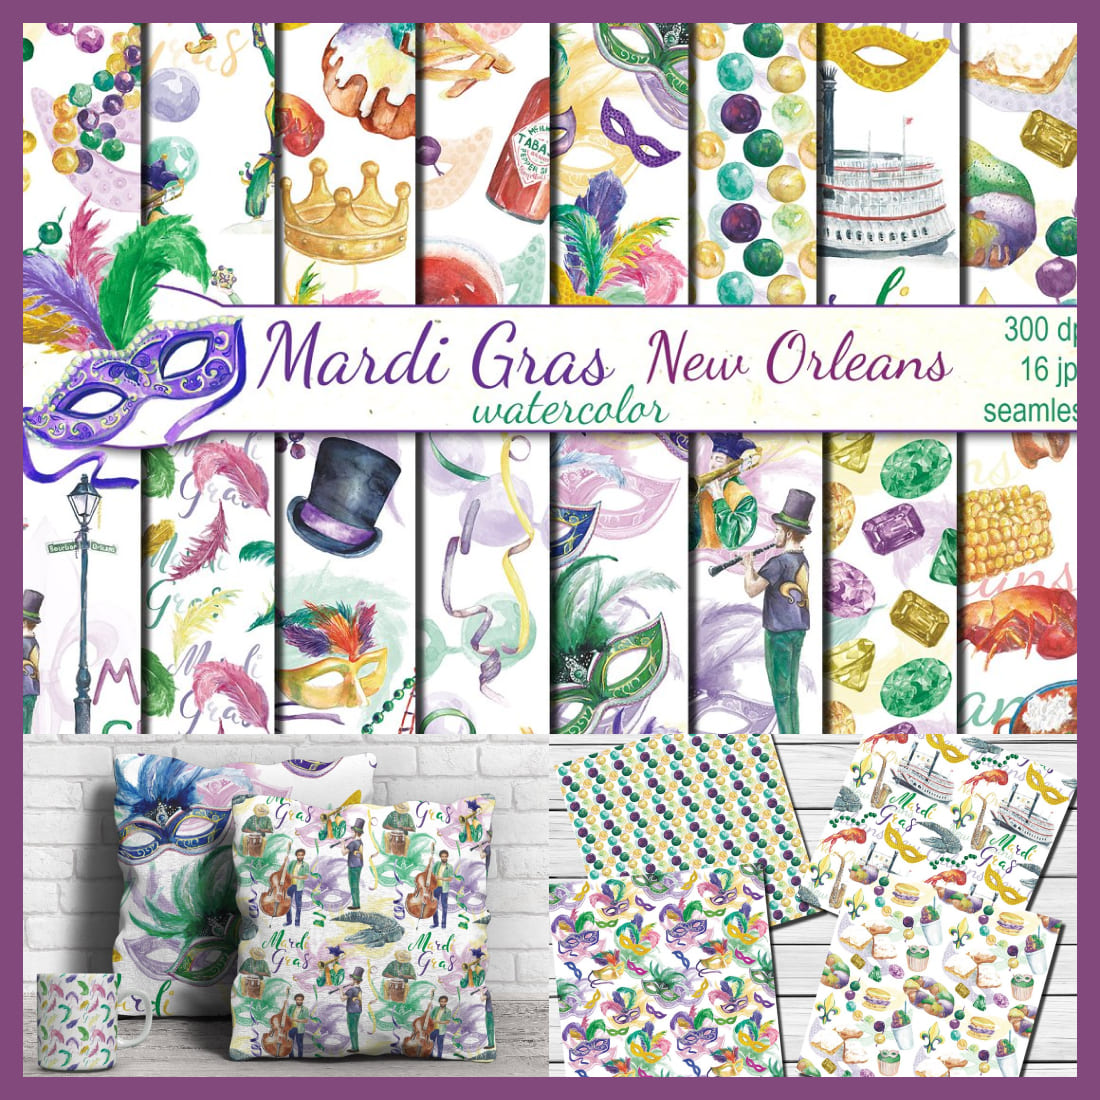 Mardi Gras New Orleans patterns.